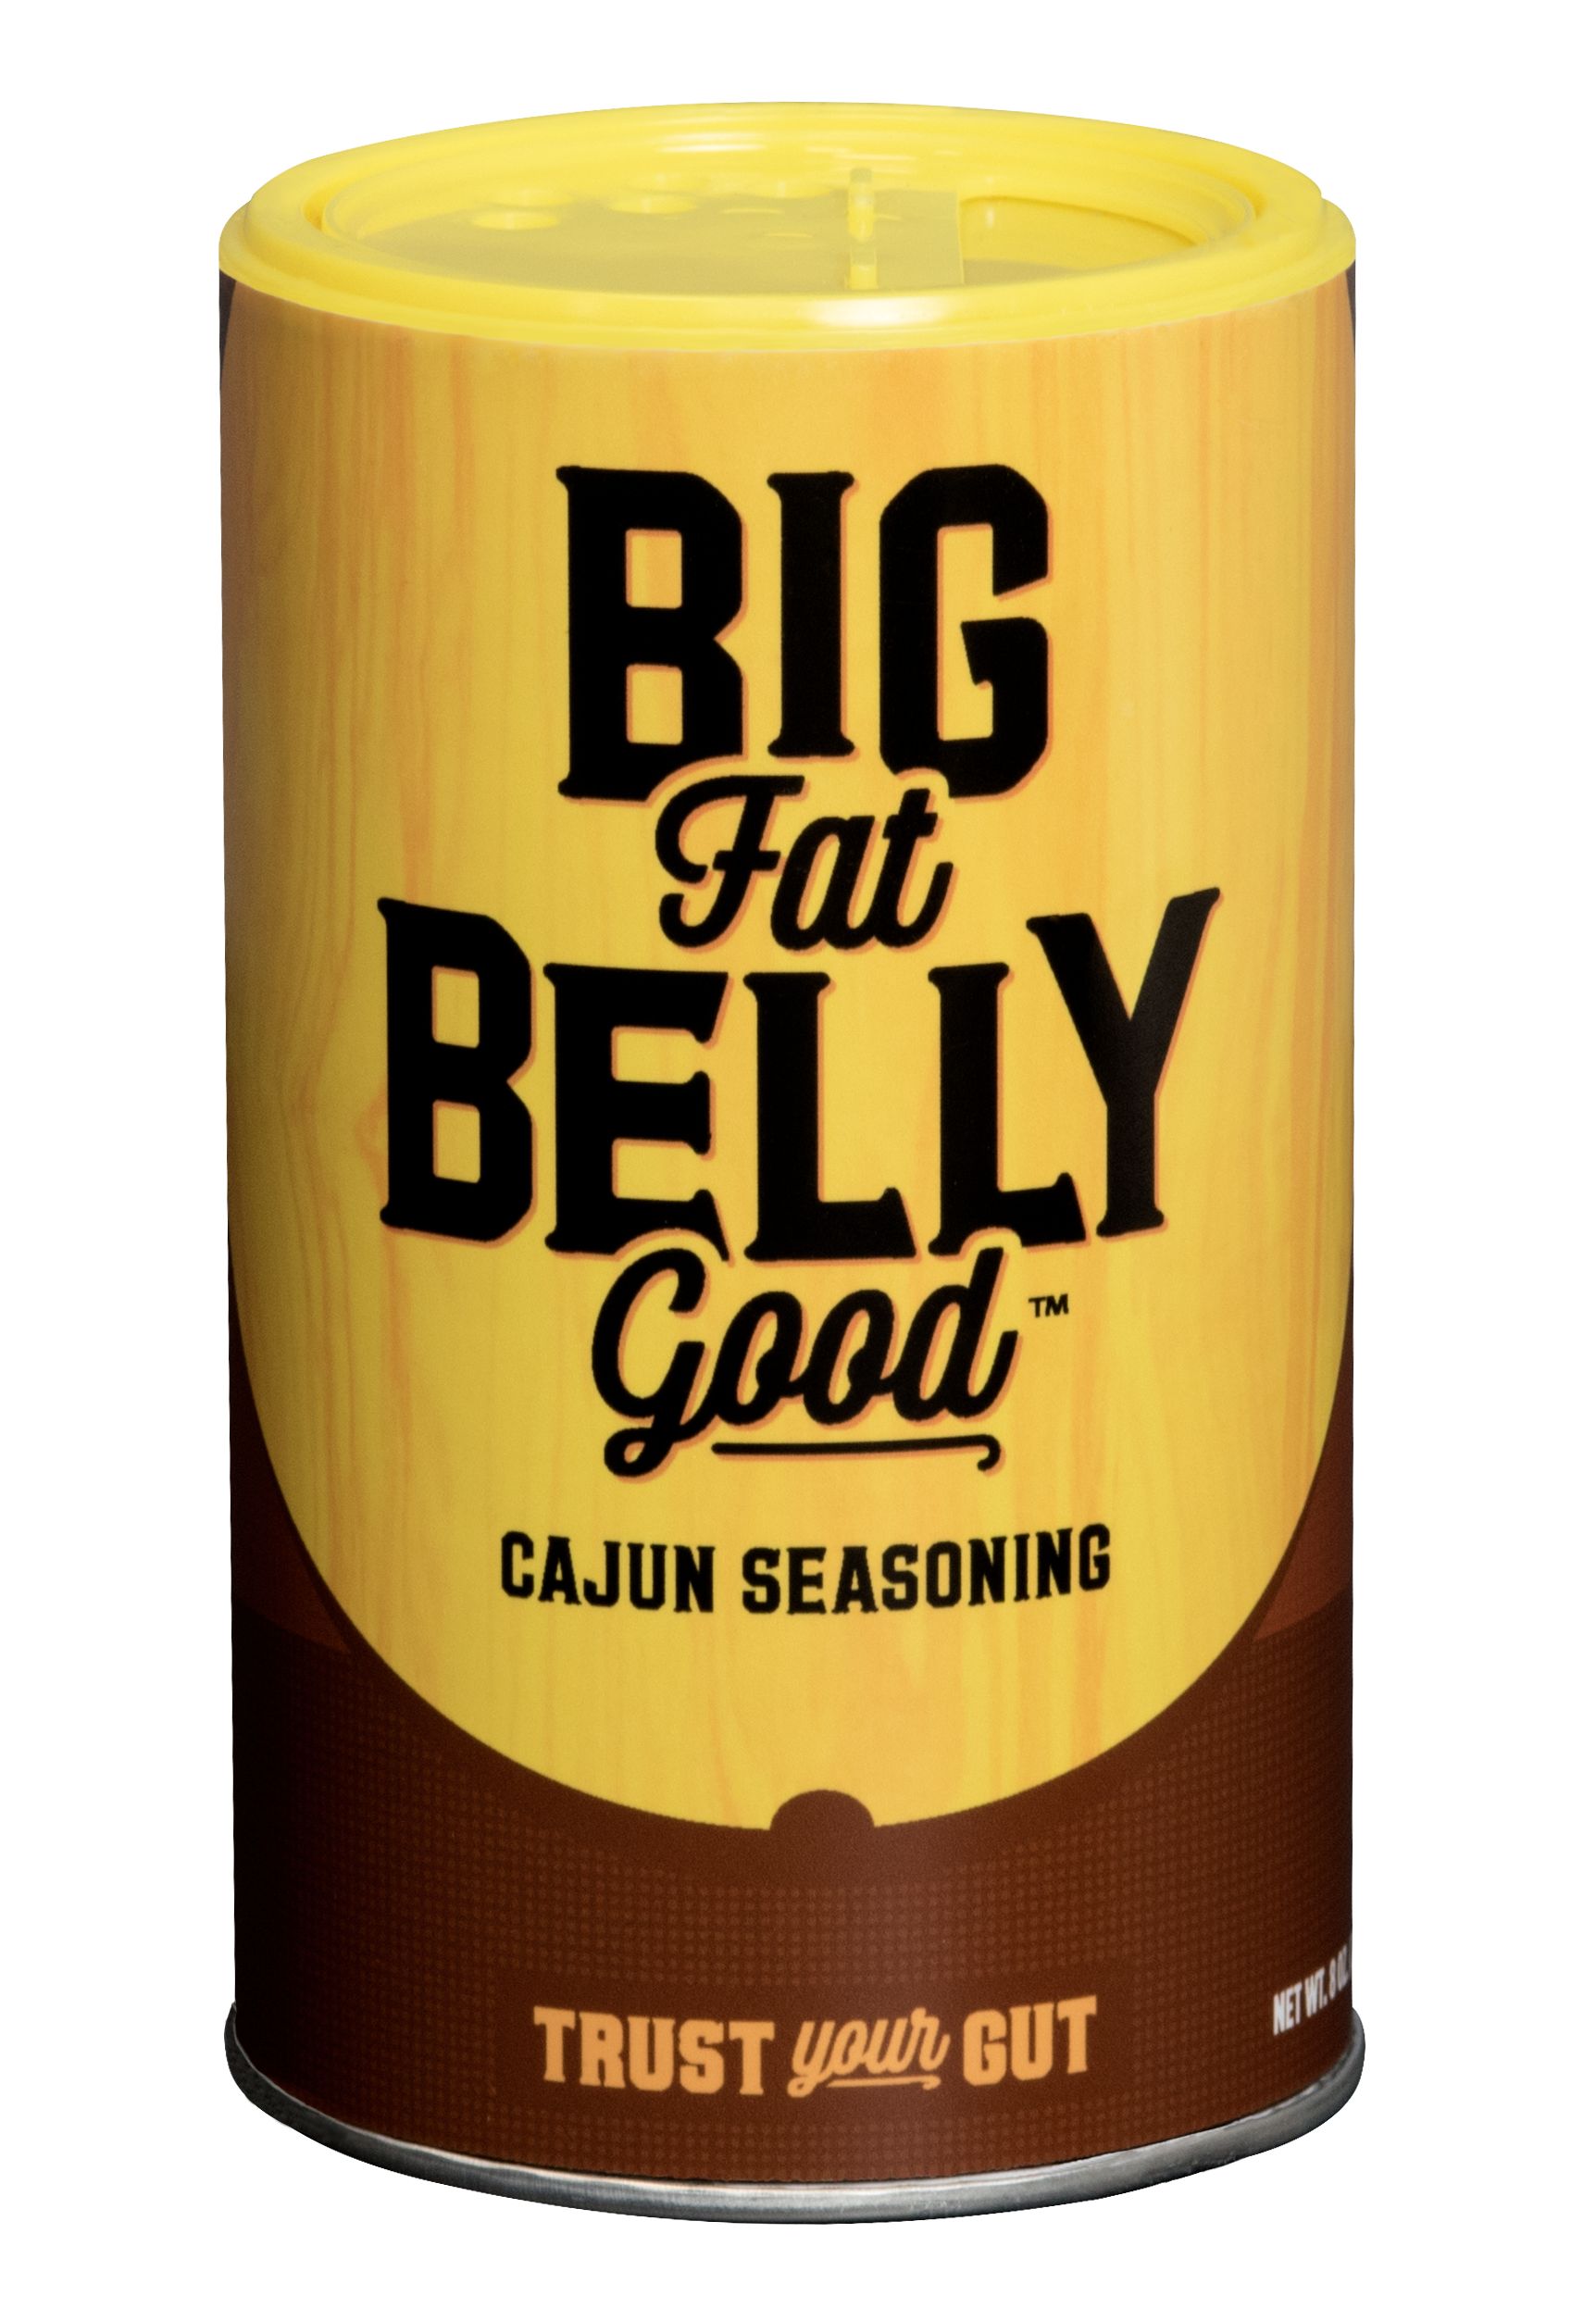 8oz. Original Cajun Seasoning Big Fat Belly Good